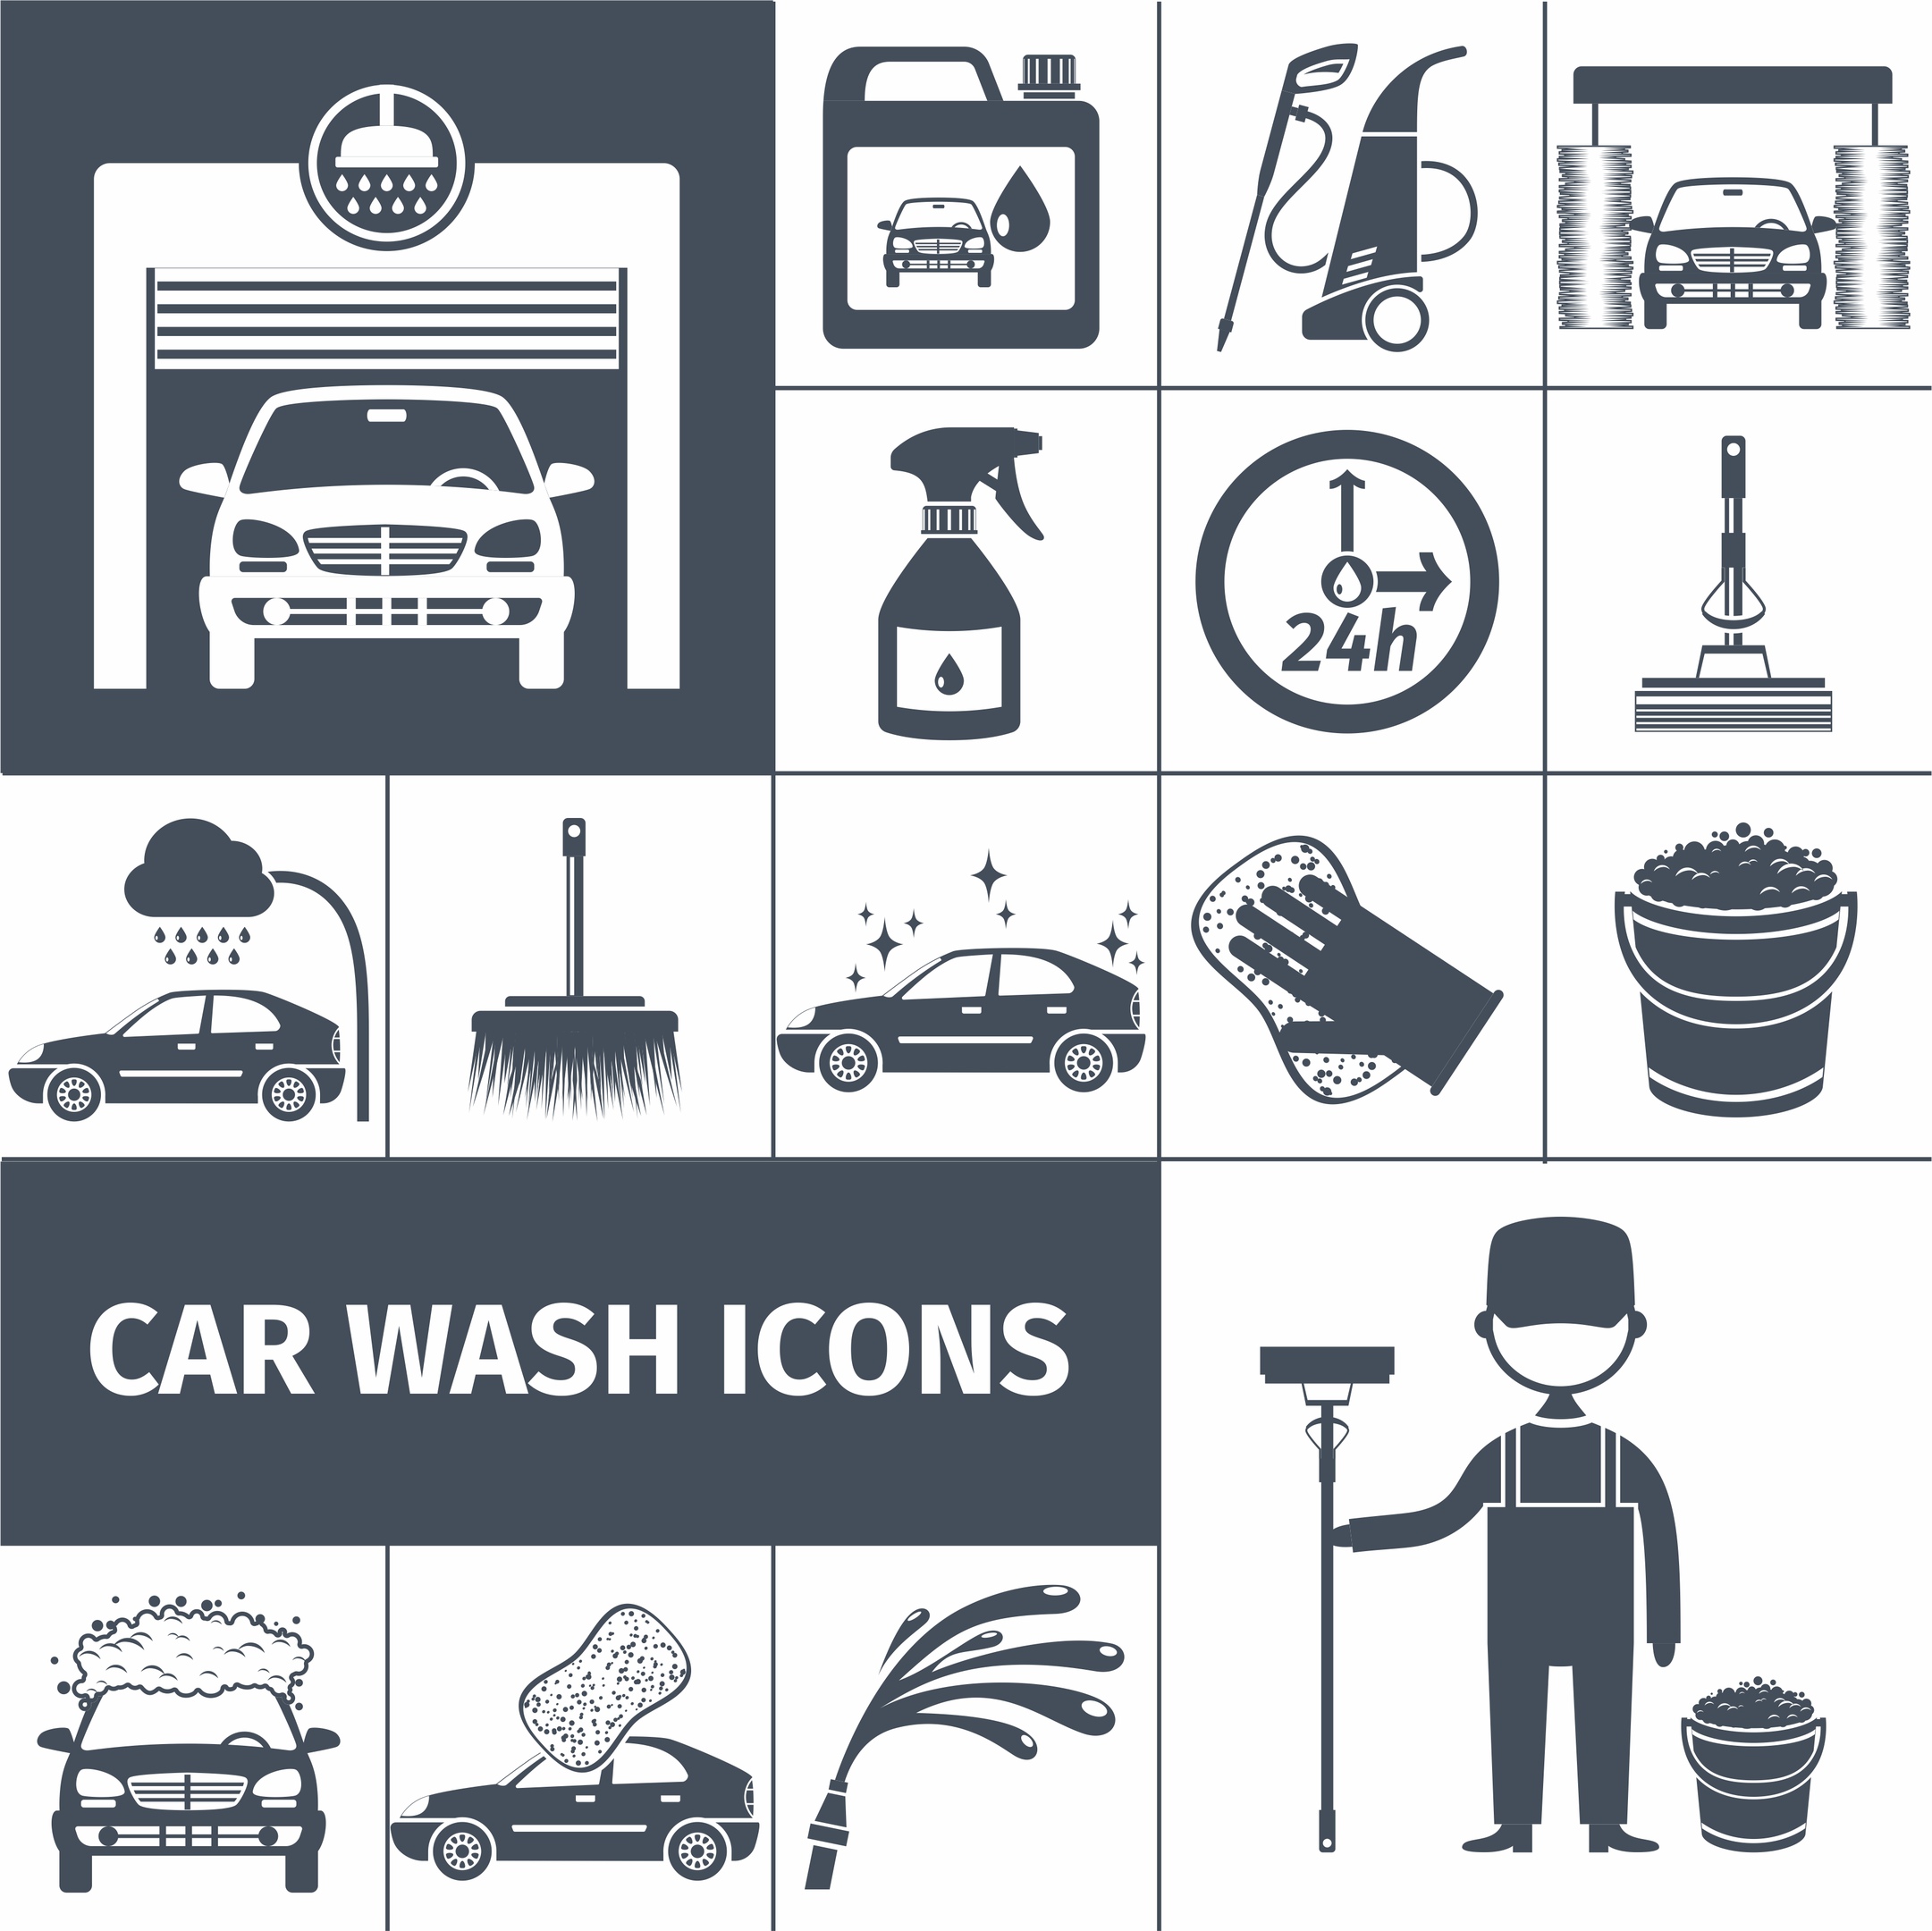 Car Wash Icons Free Vector